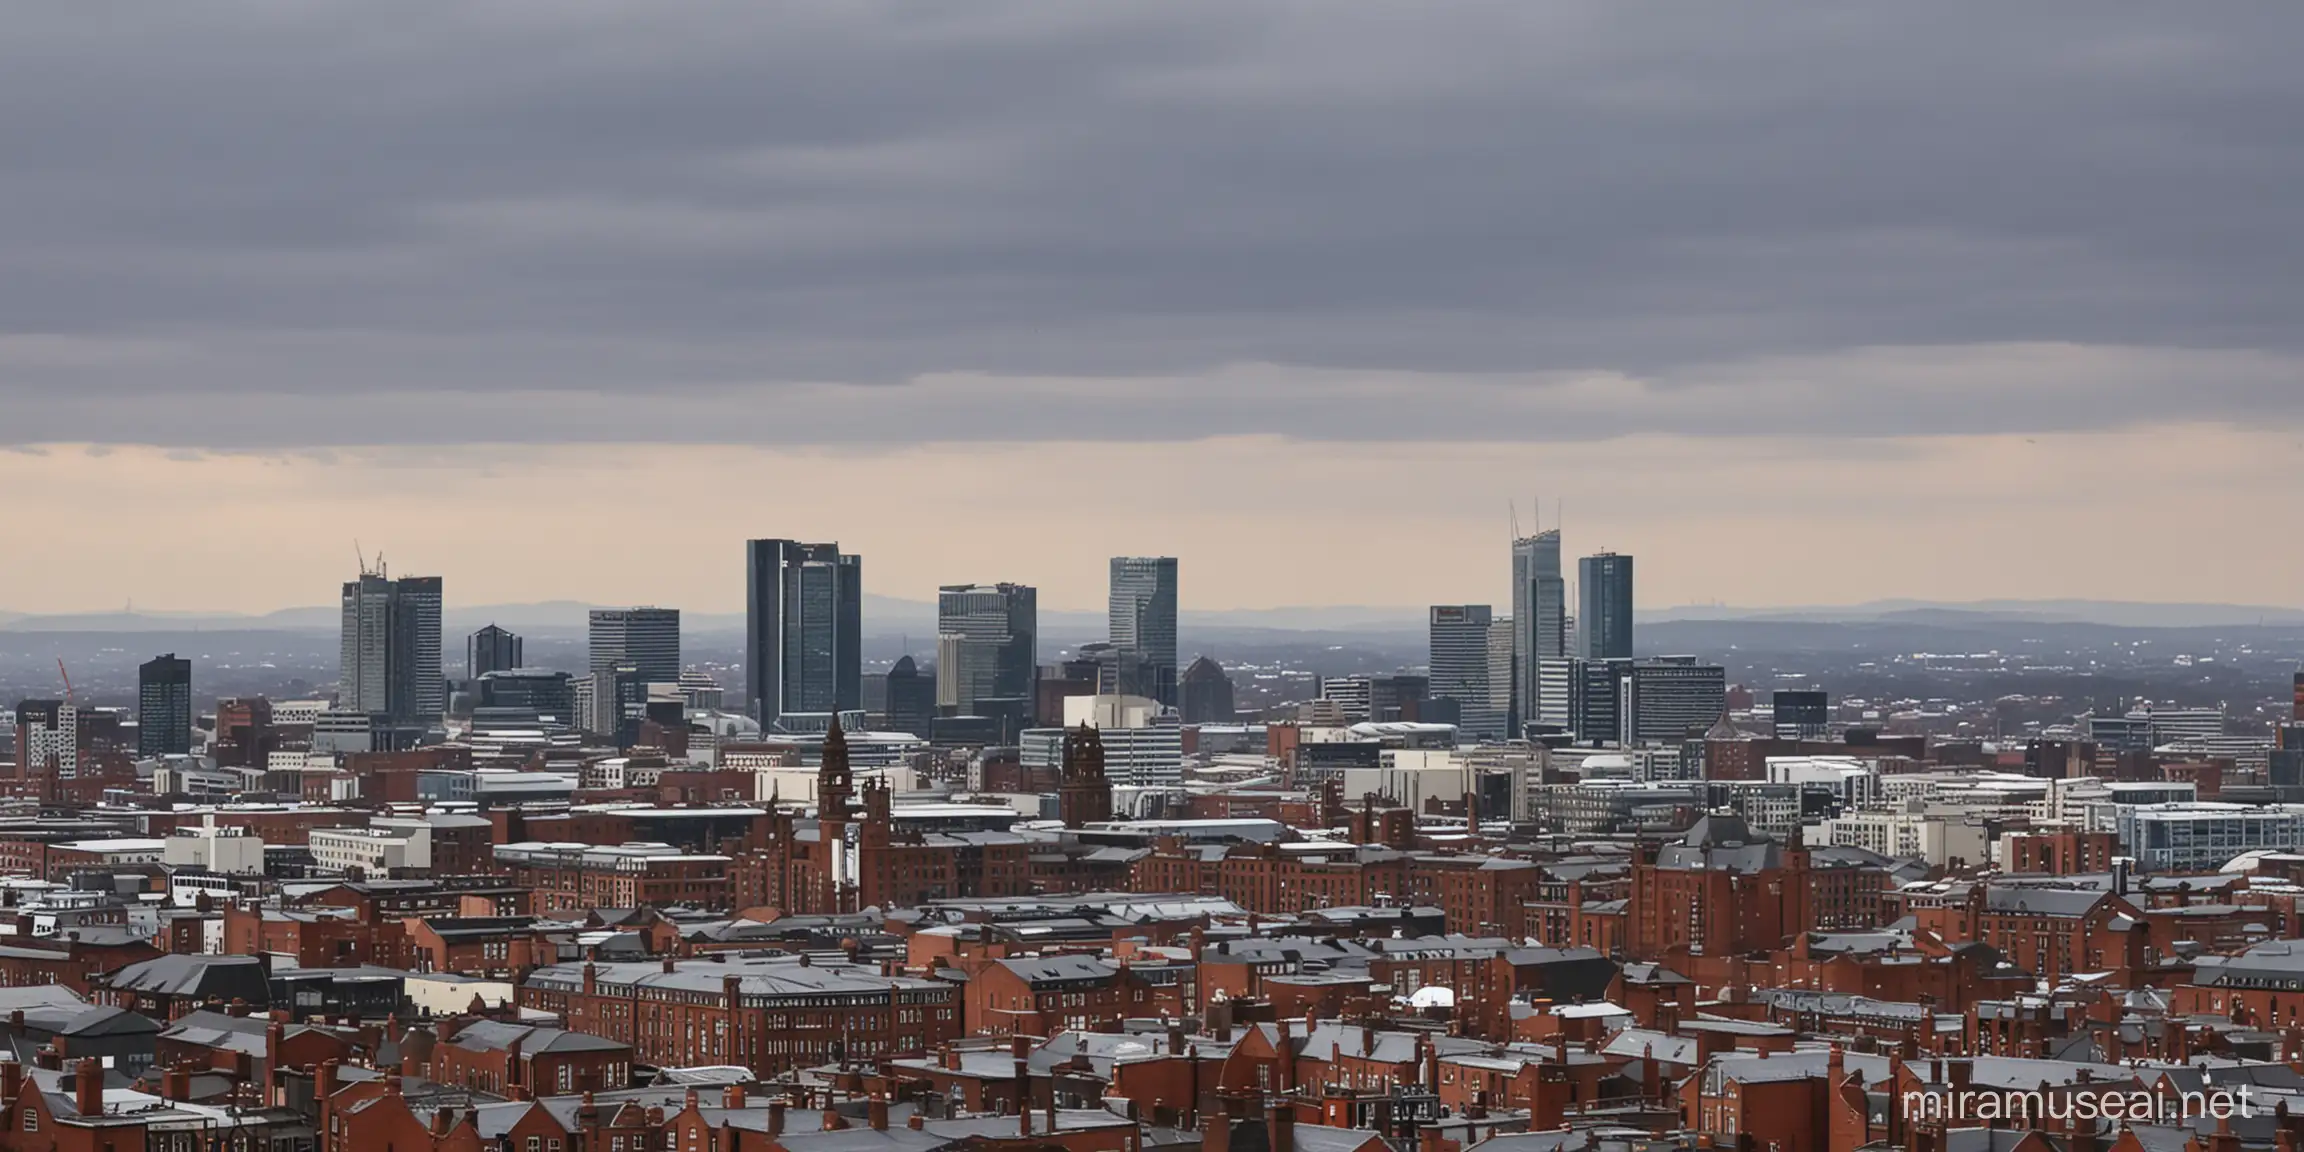 Breathtaking Manchester Skyline at Dusk Iconic Cityscape Illuminated with Vibrant Lights